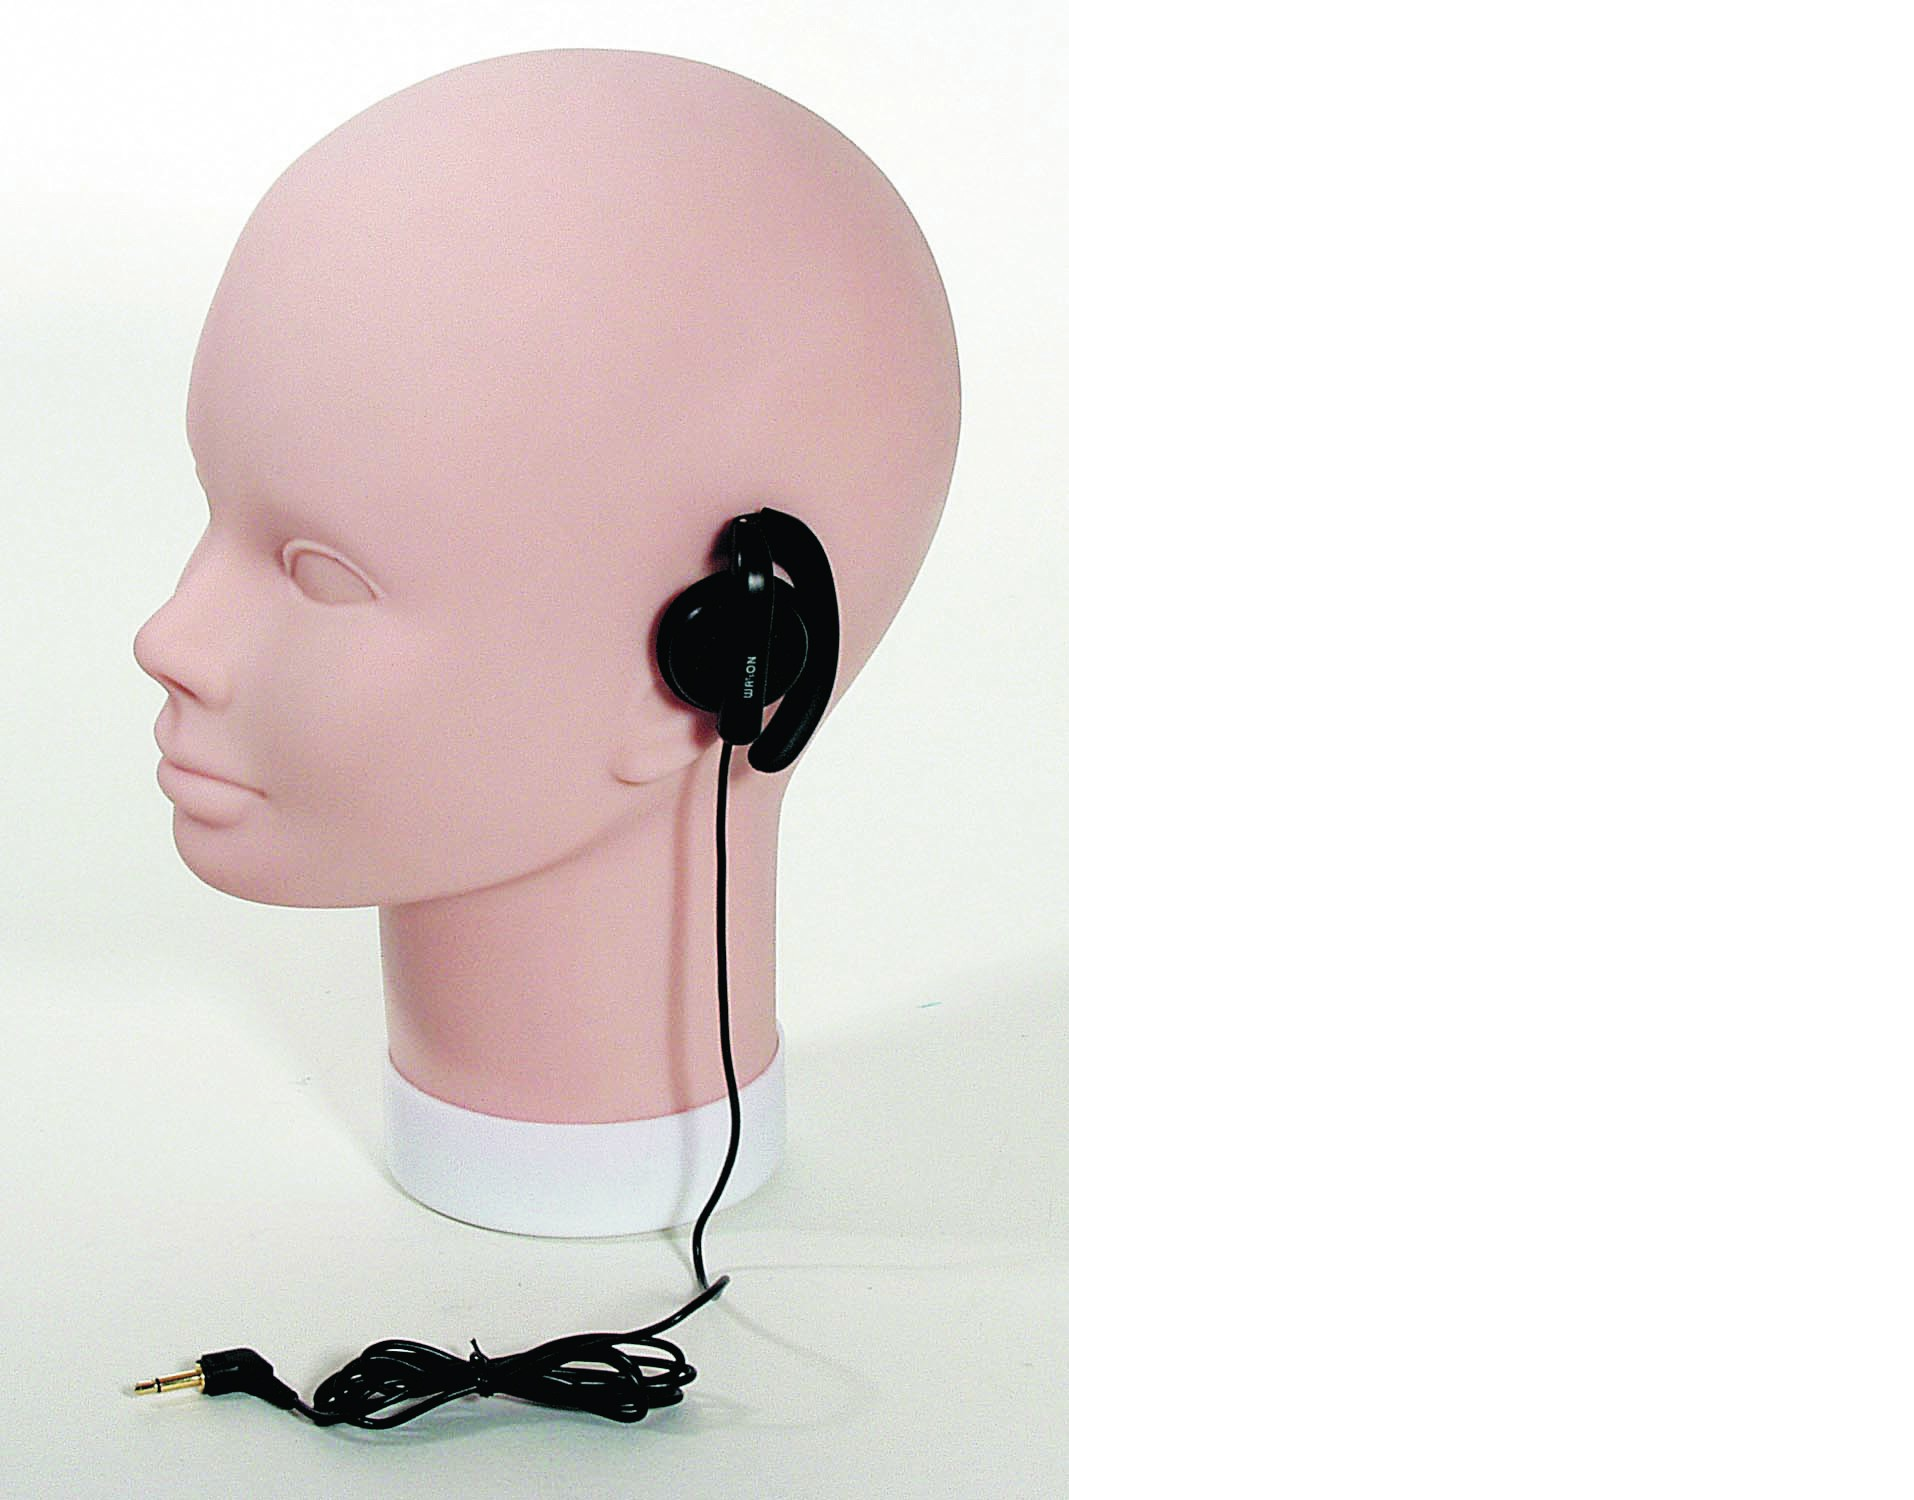 WEP-400 WATSON DELUXE OVER-THE-EAR EARPIECE